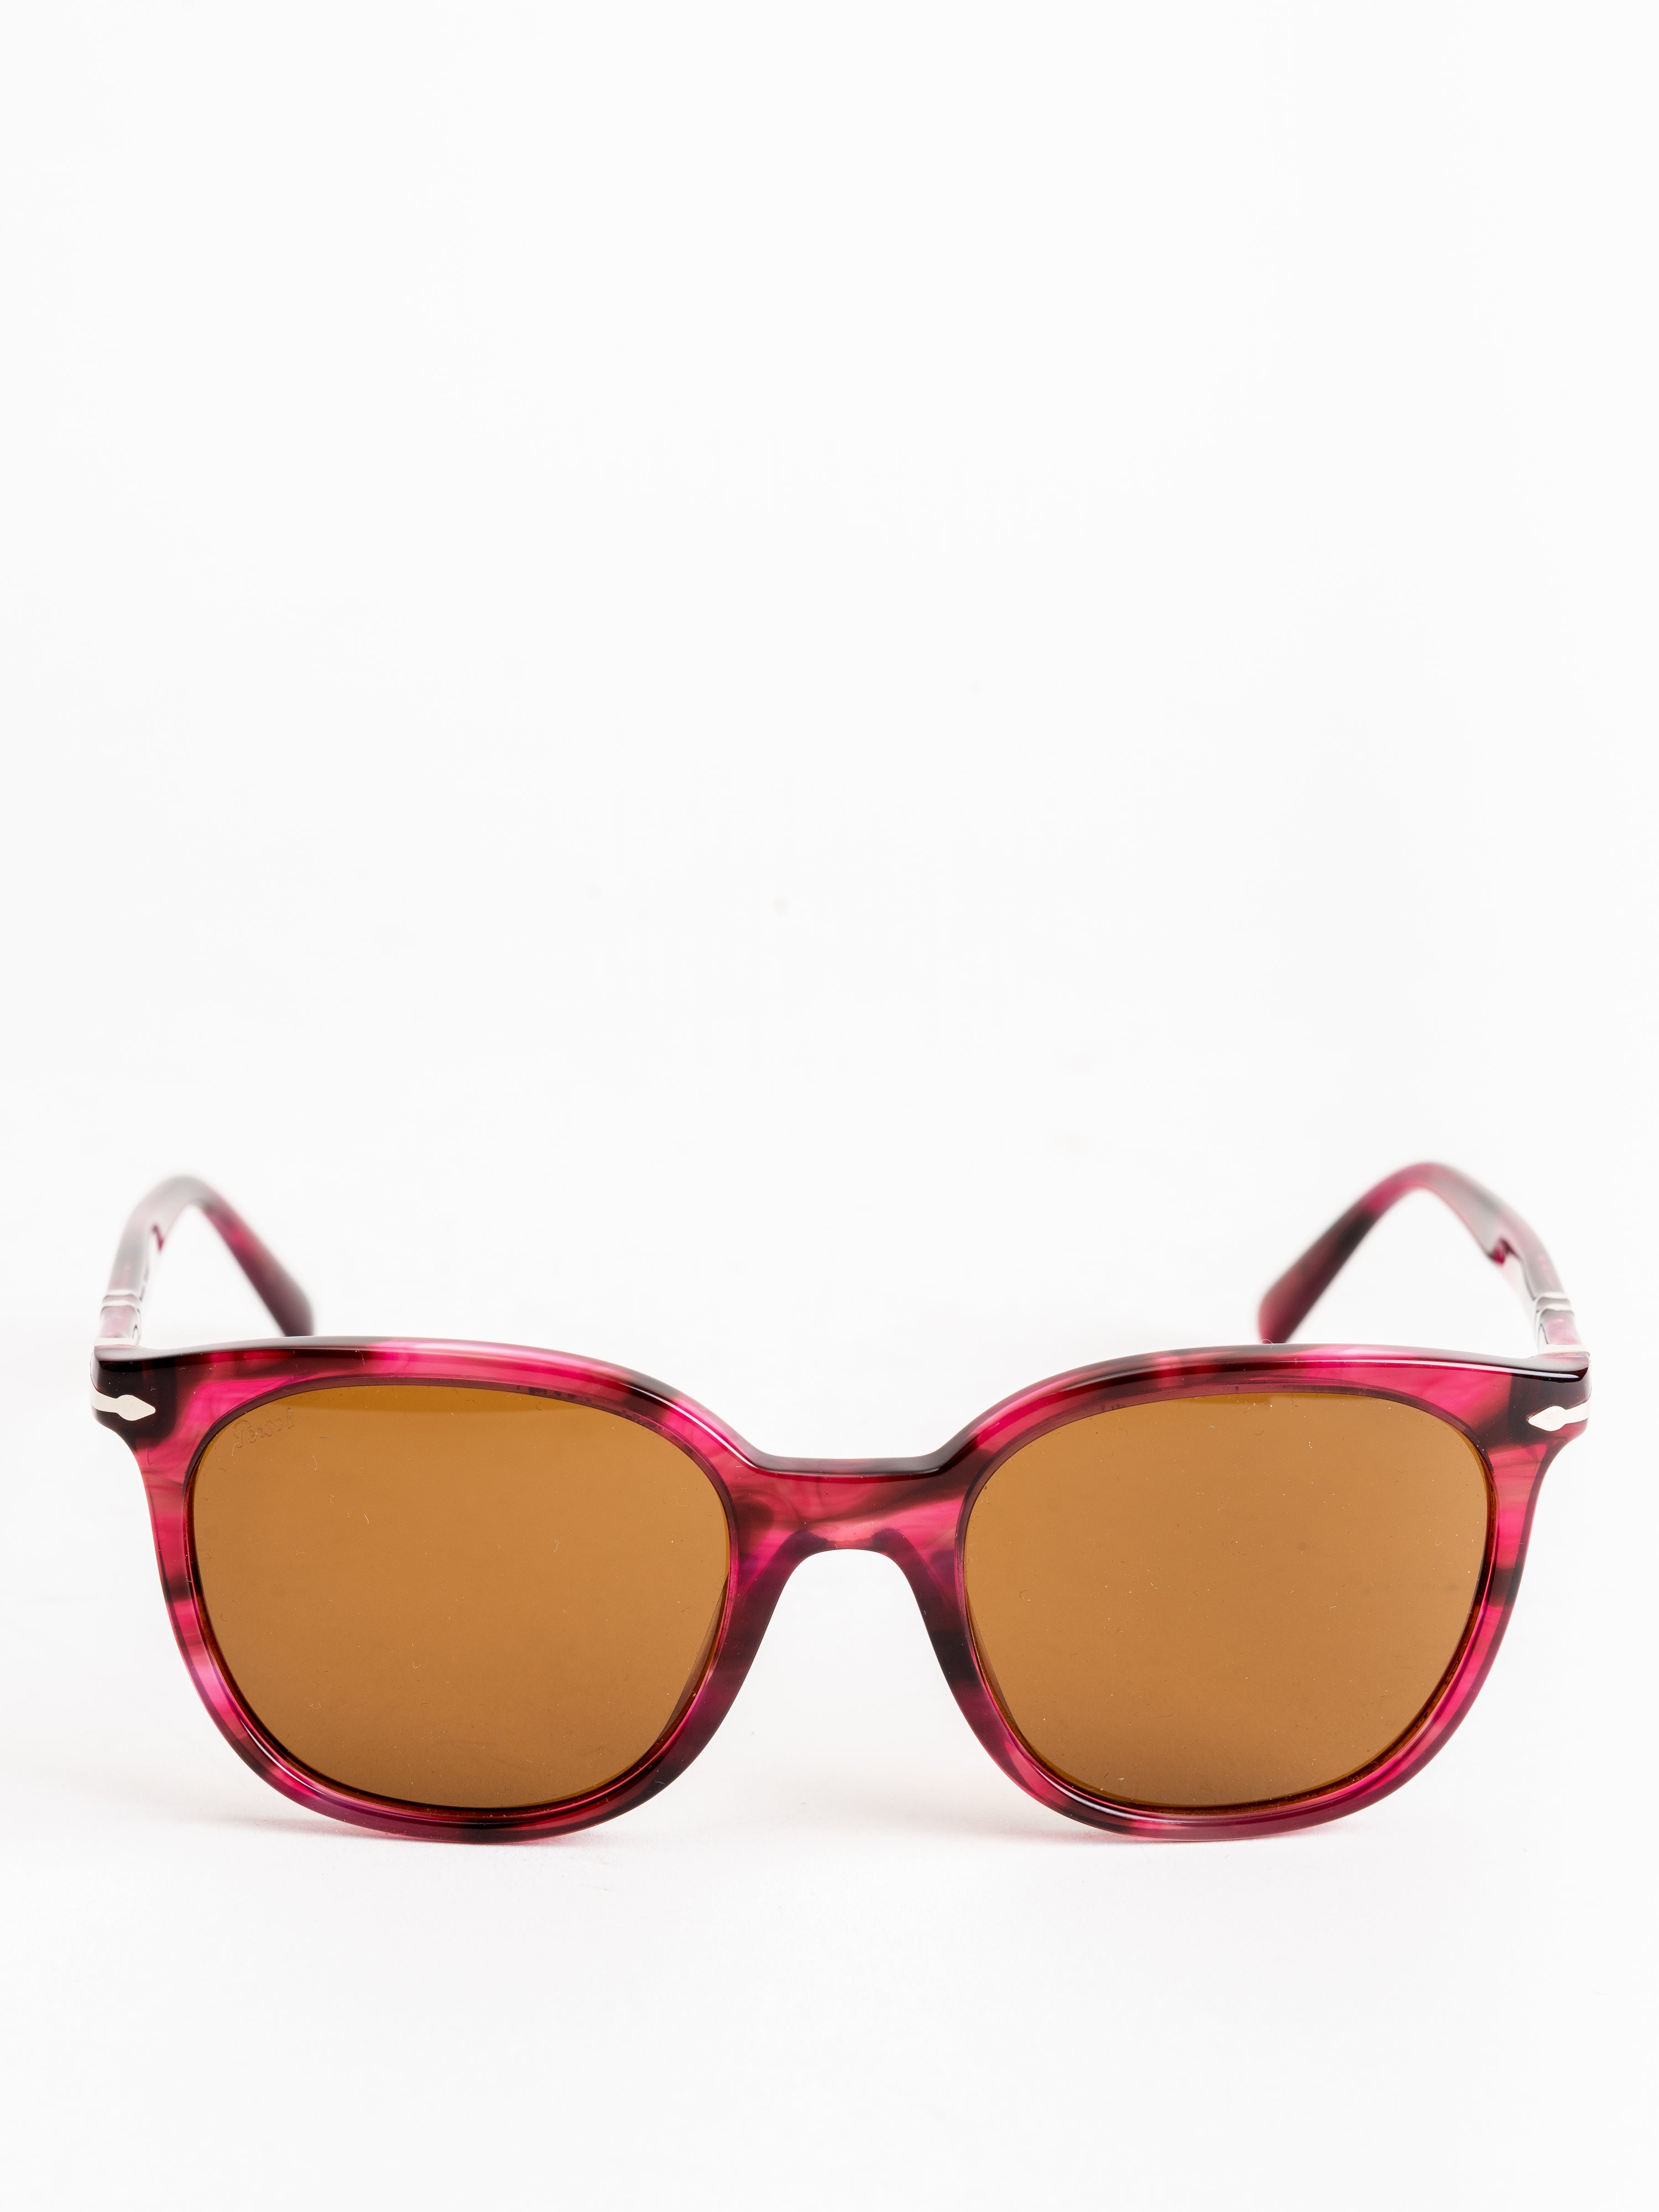 Persol Madreterra Sunglasses | Glasses.com® | Free Shipping